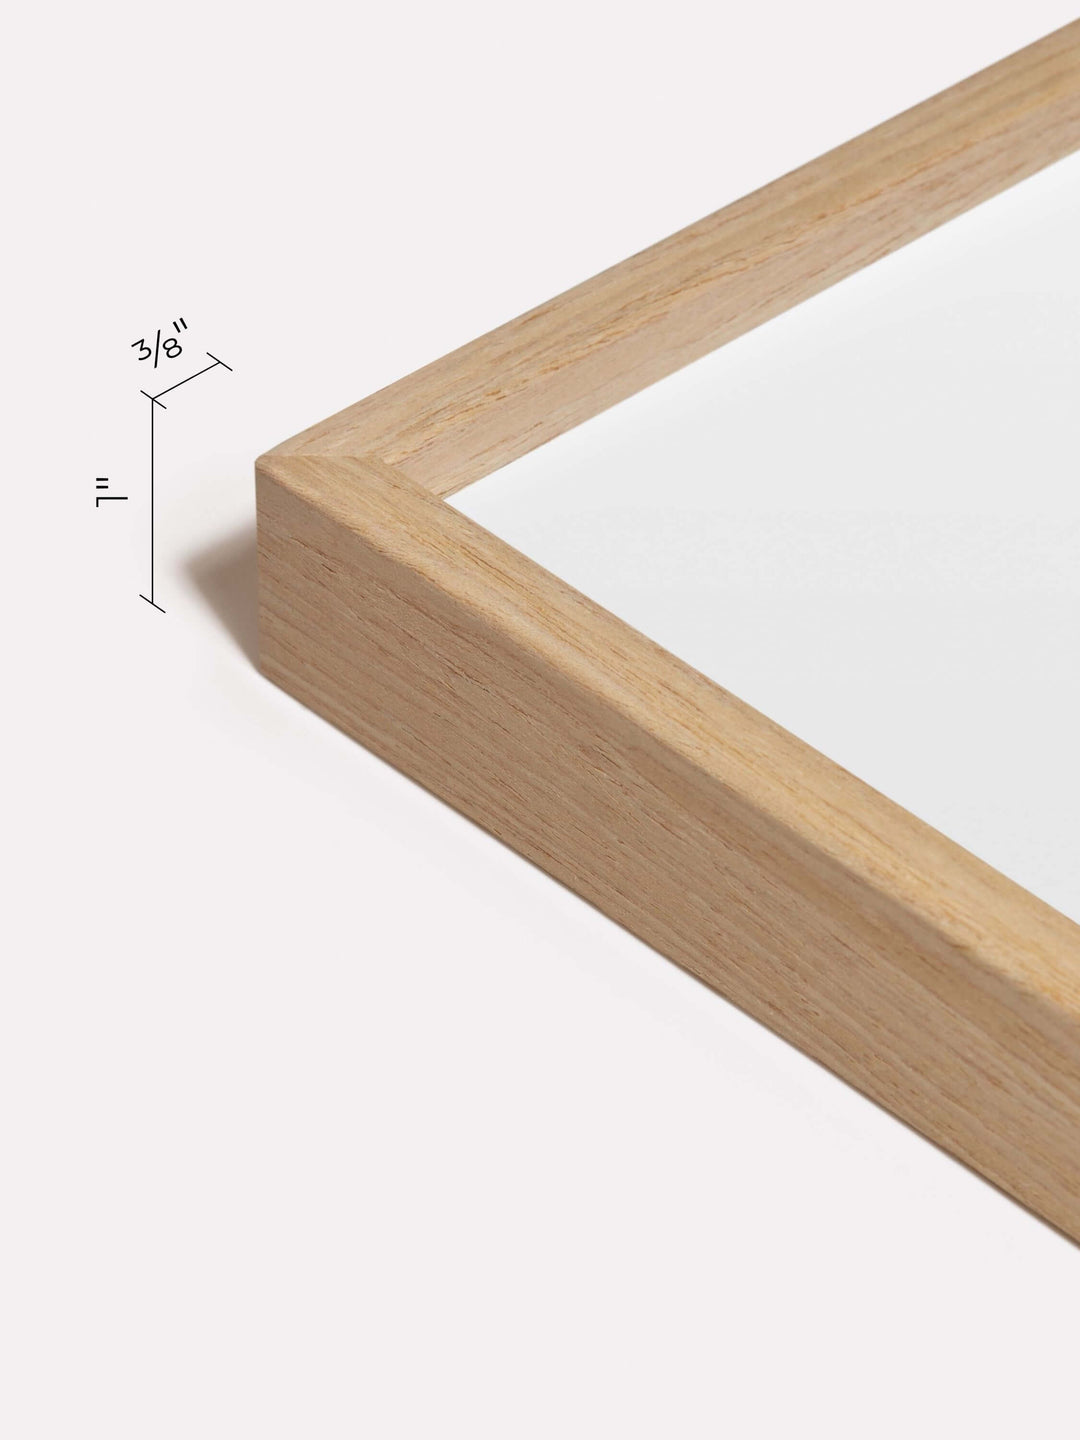 24x36-inch Thin Frame, Oak - Close-up view